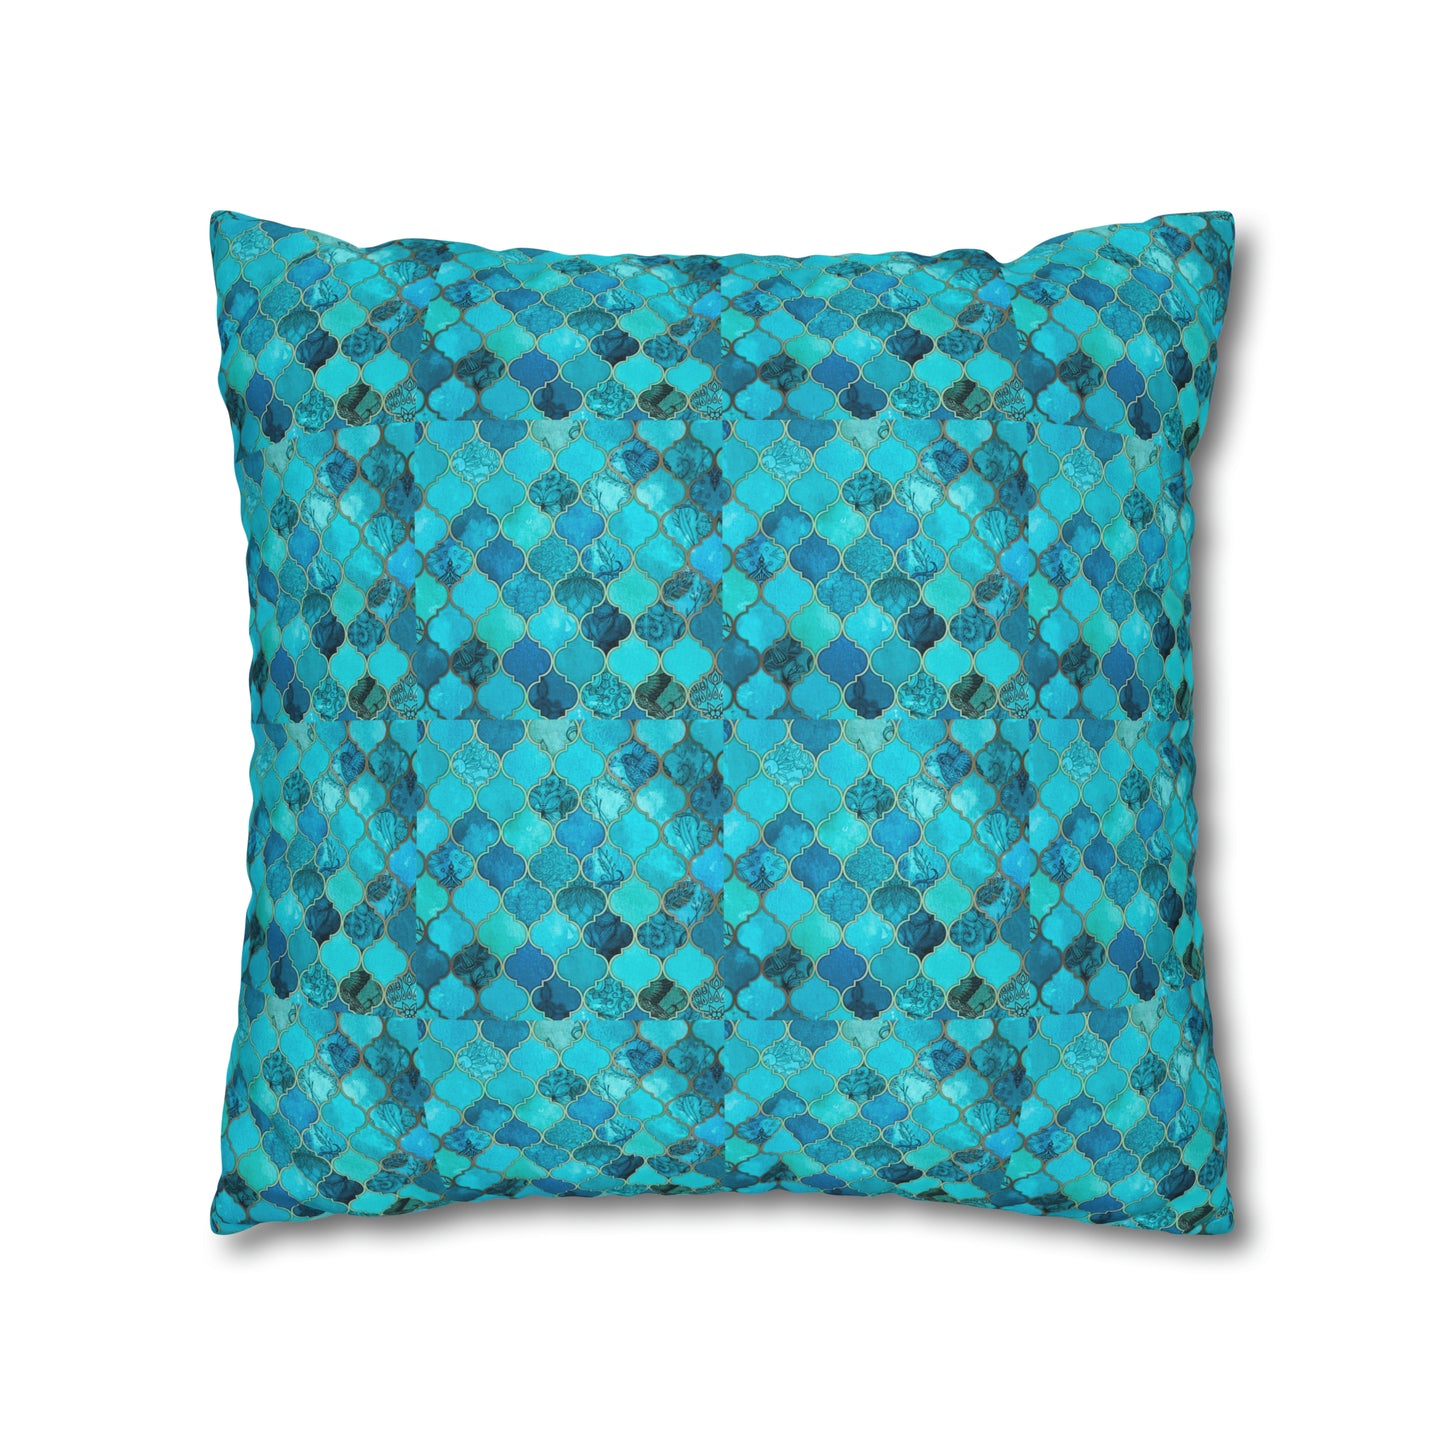 Teal and Turquoise Arabesque Tile Marrakech Moroccan Spun Polyester Pillow Cover